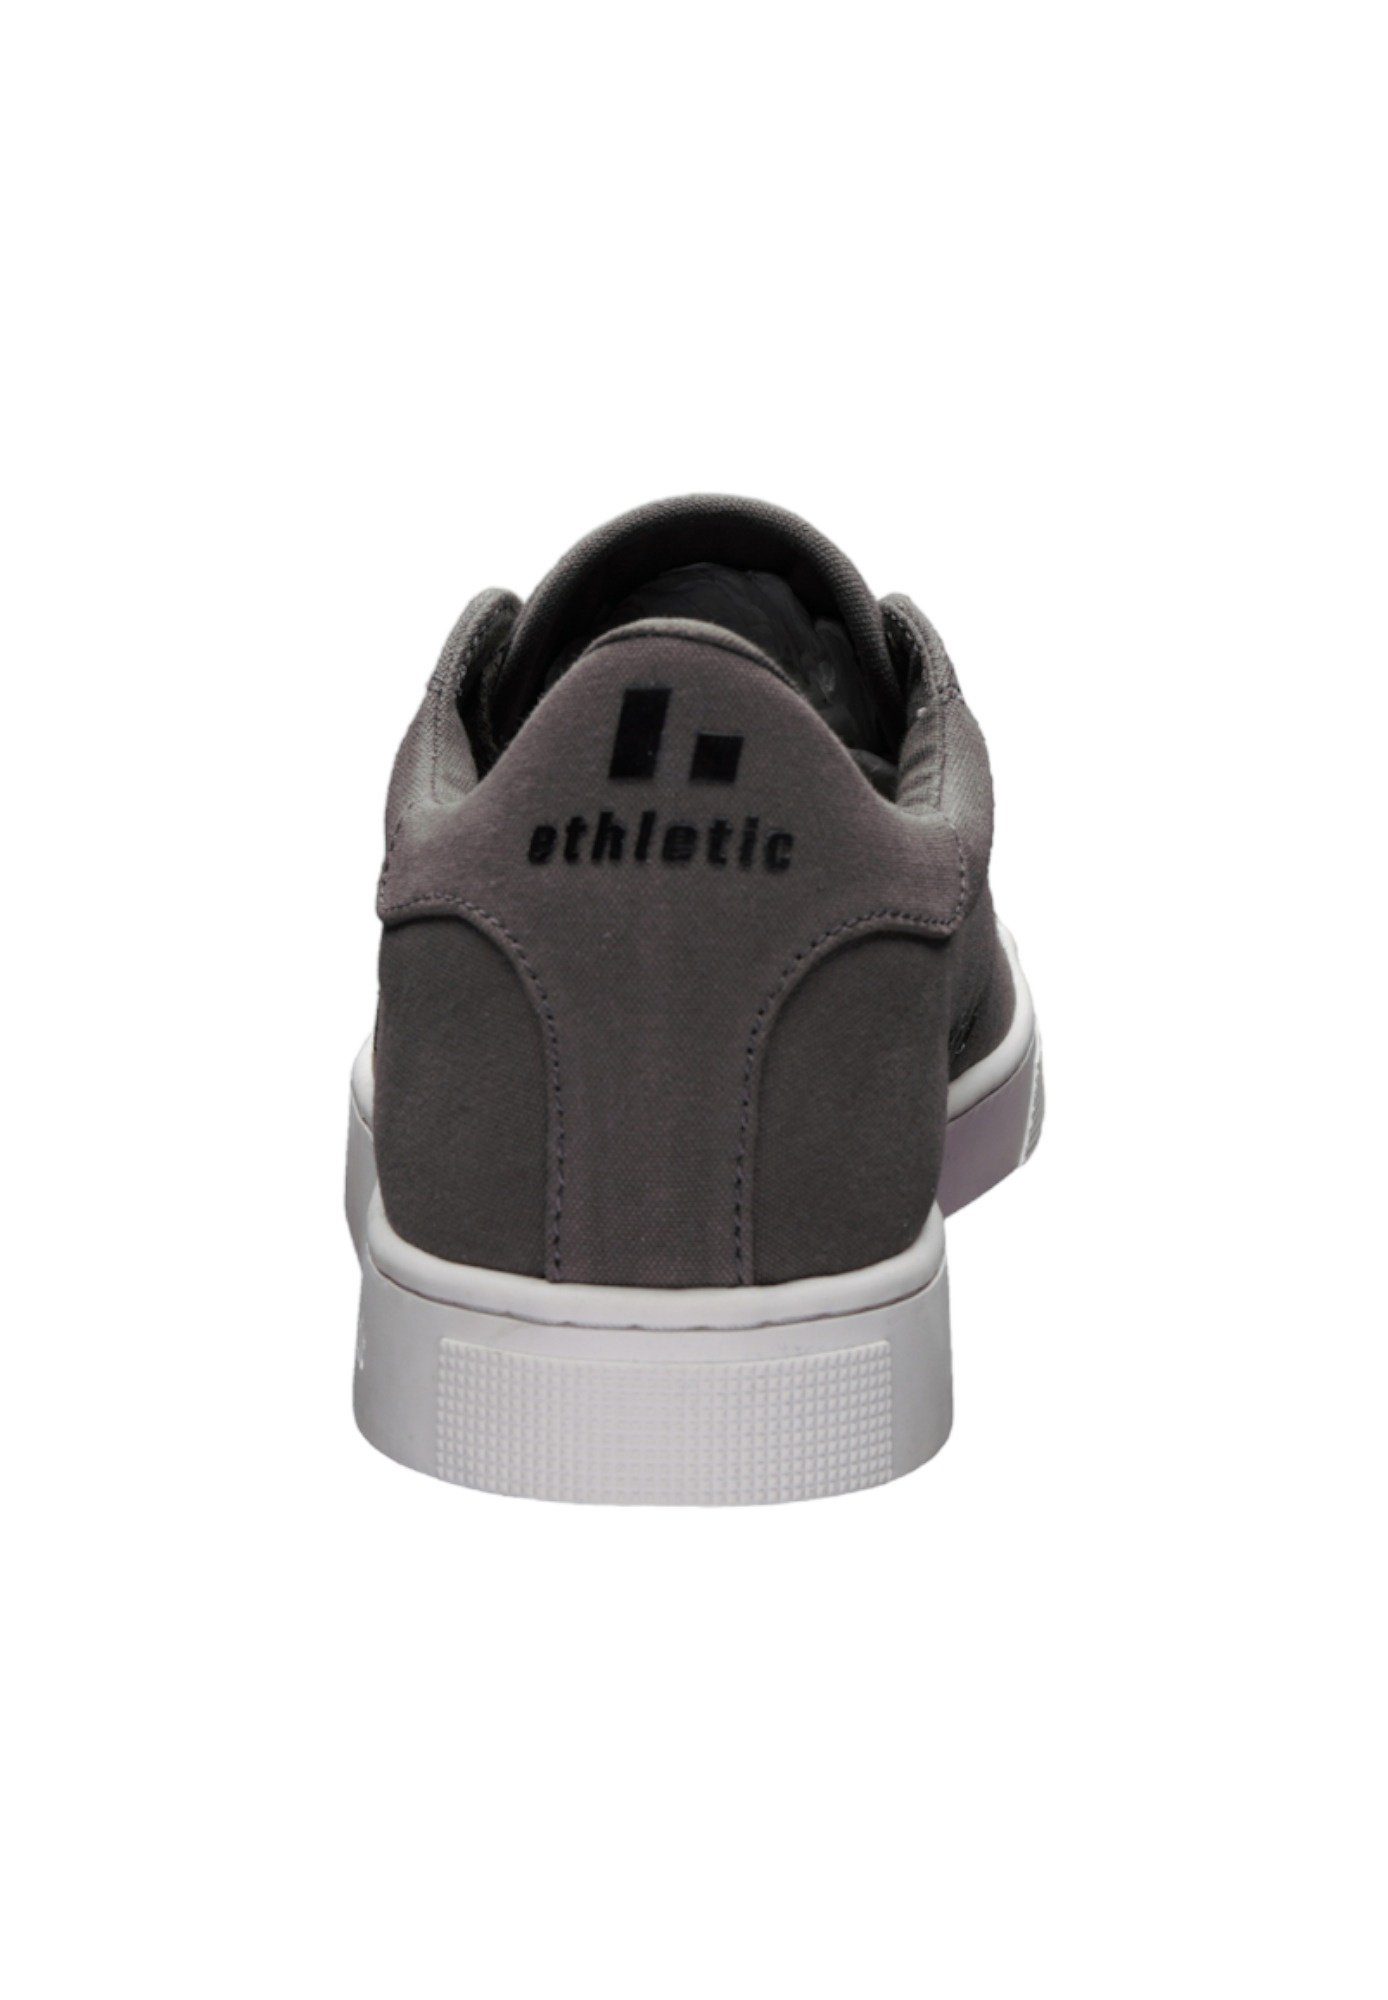 Black Sneaker Cut Lo Produkt Donkey ETHLETIC Active - Jet Grey Fairtrade